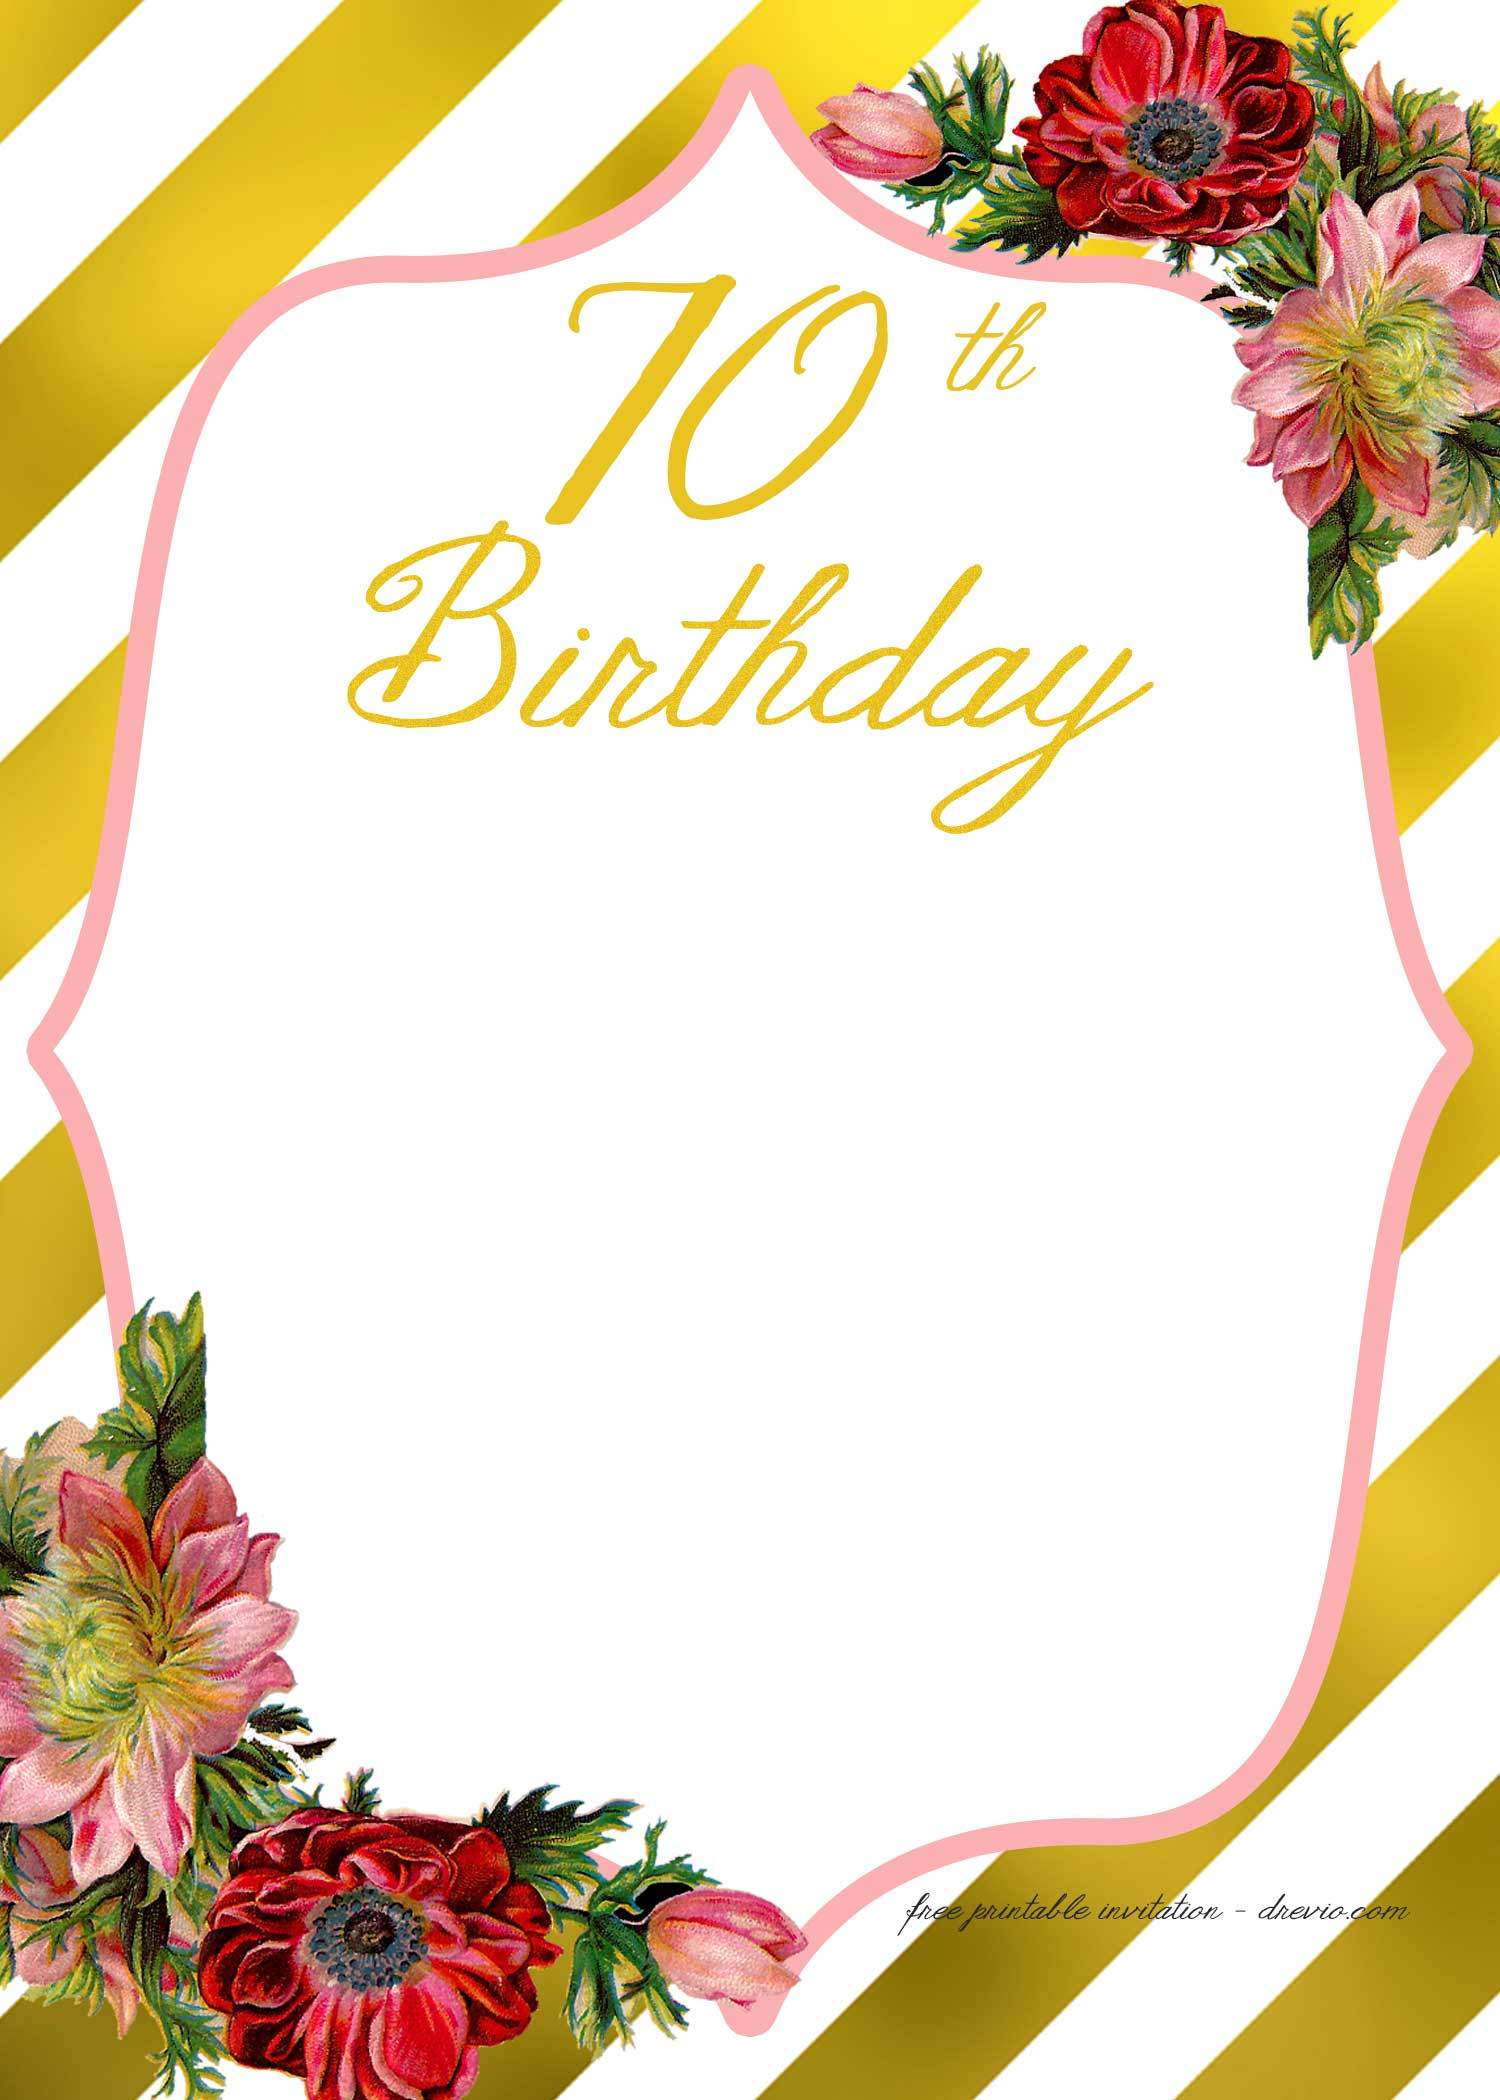 Free Birthday Party Invitations Templates
 Adult Birthday Invitations Template for 50th years old